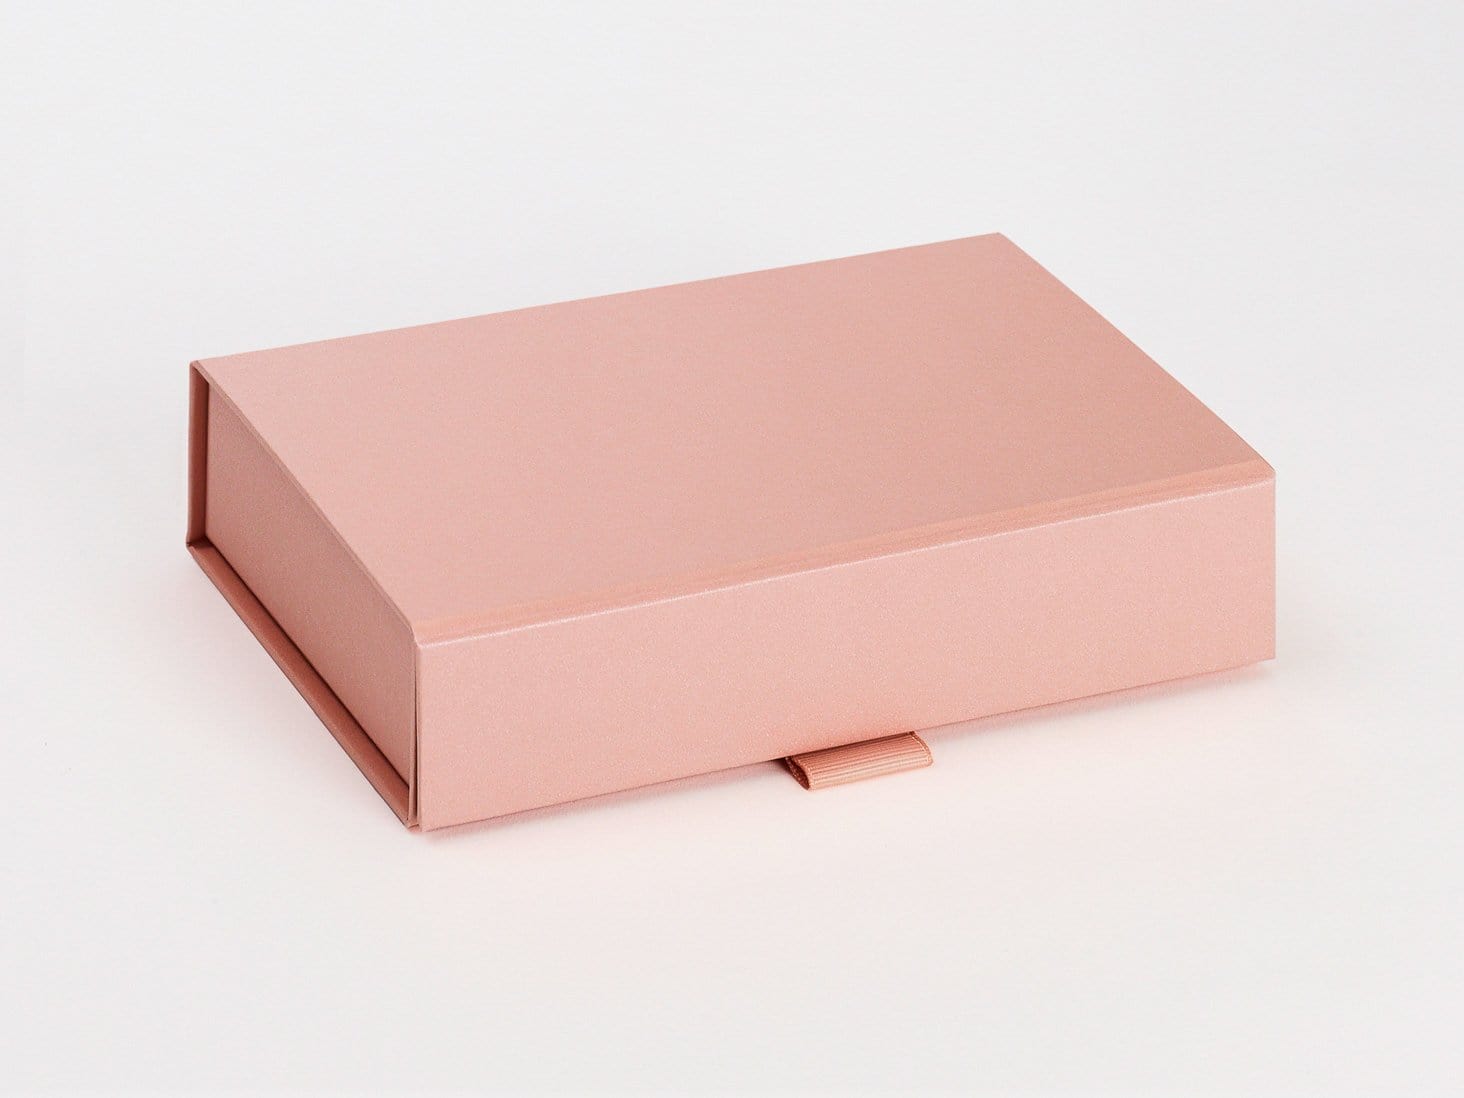 Rose Gold A6 Shallow Gift Box Sample  Assembled